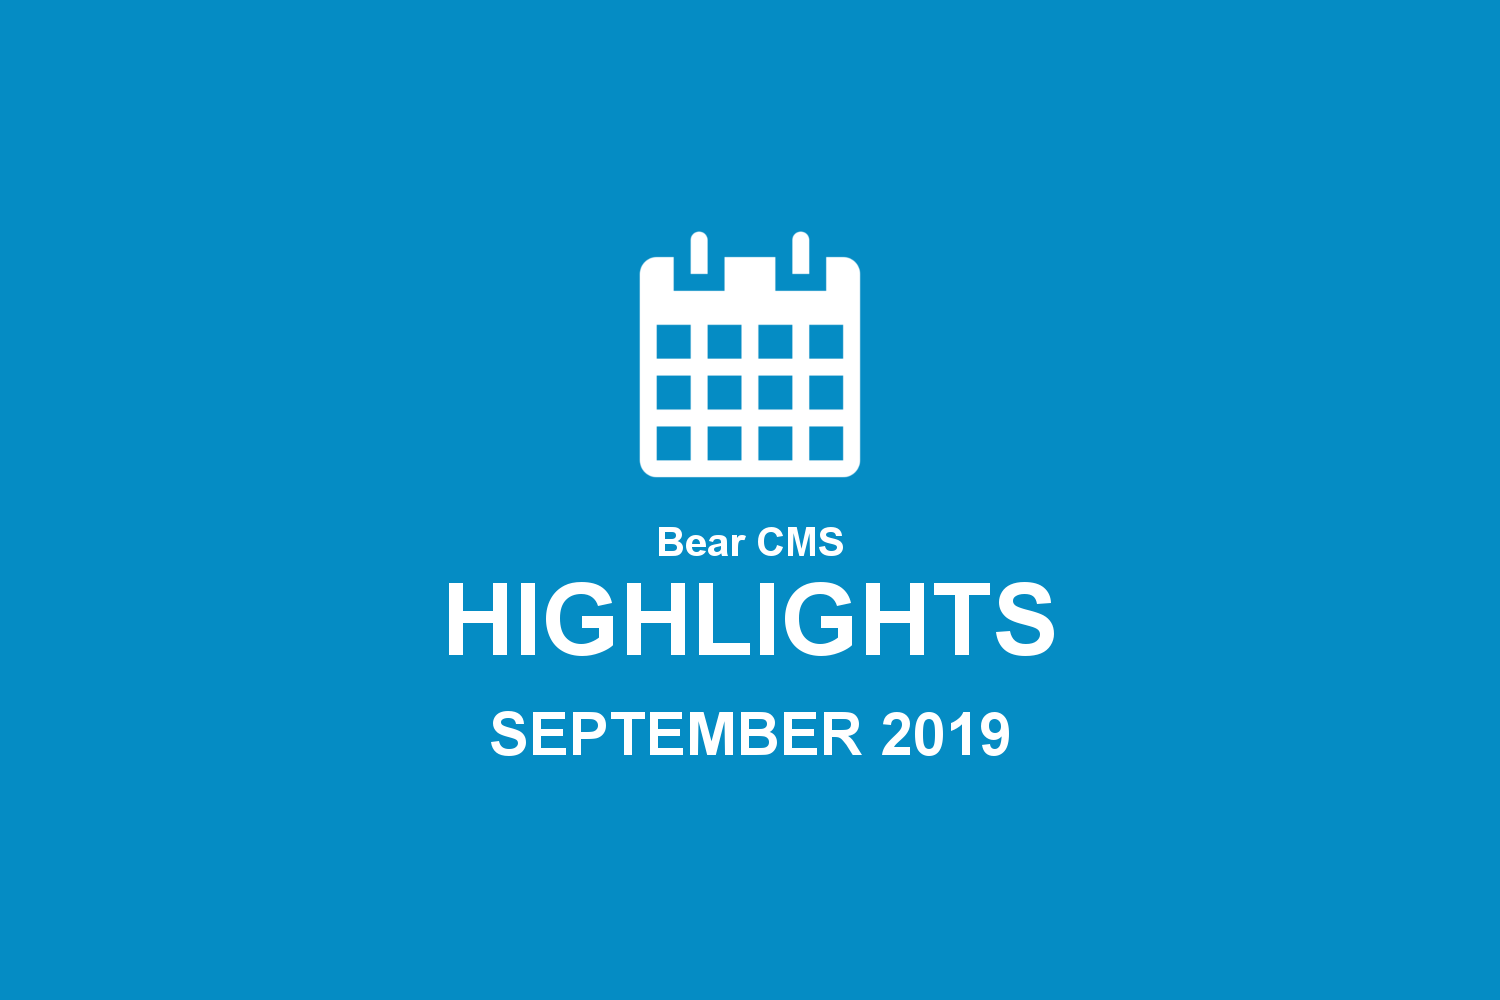 Bear CMS highlights (September 2019)